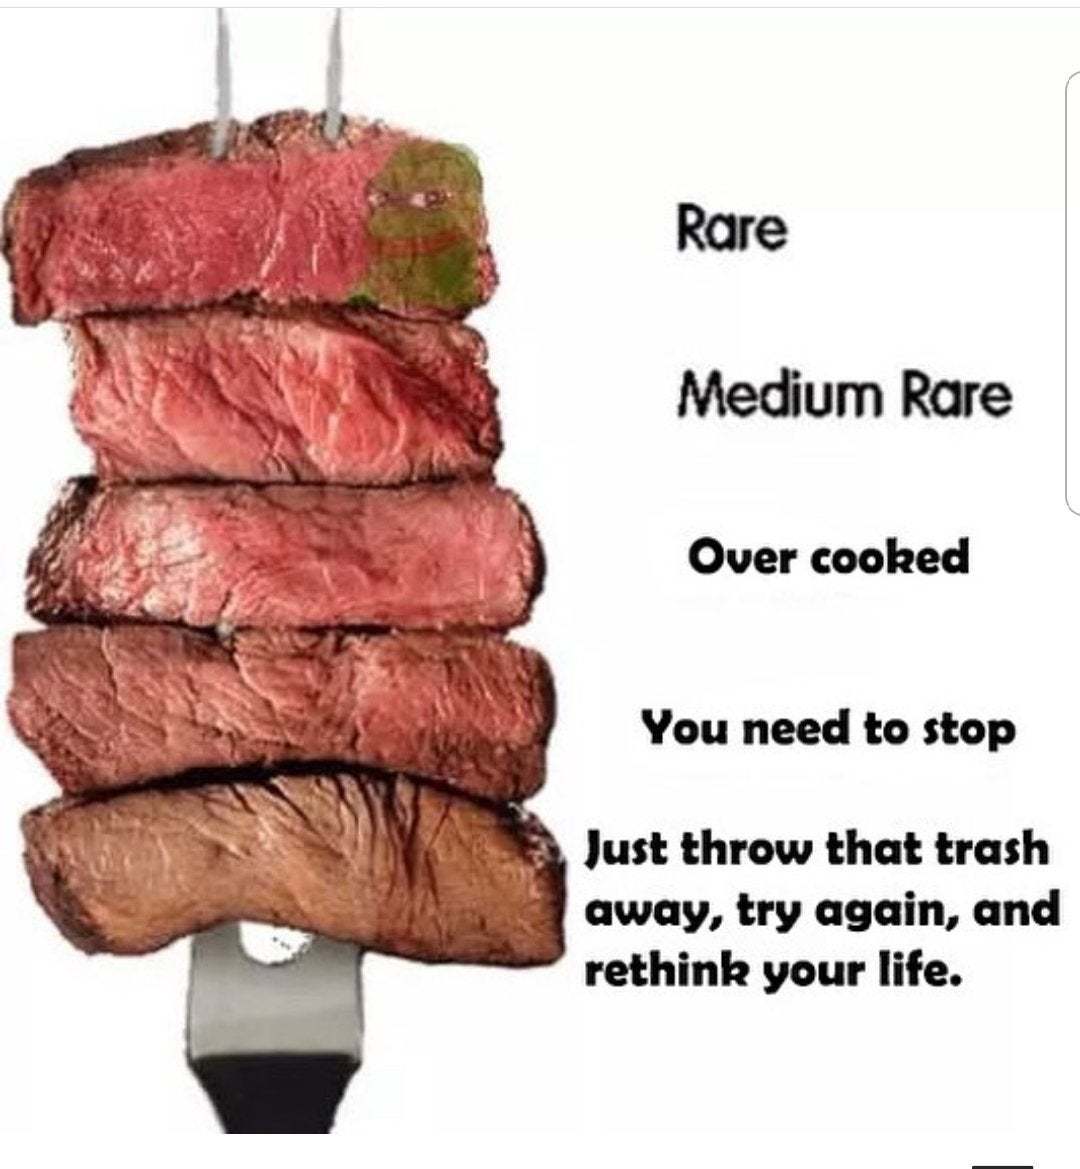 One reason I don't go to high end steak restaurants. 